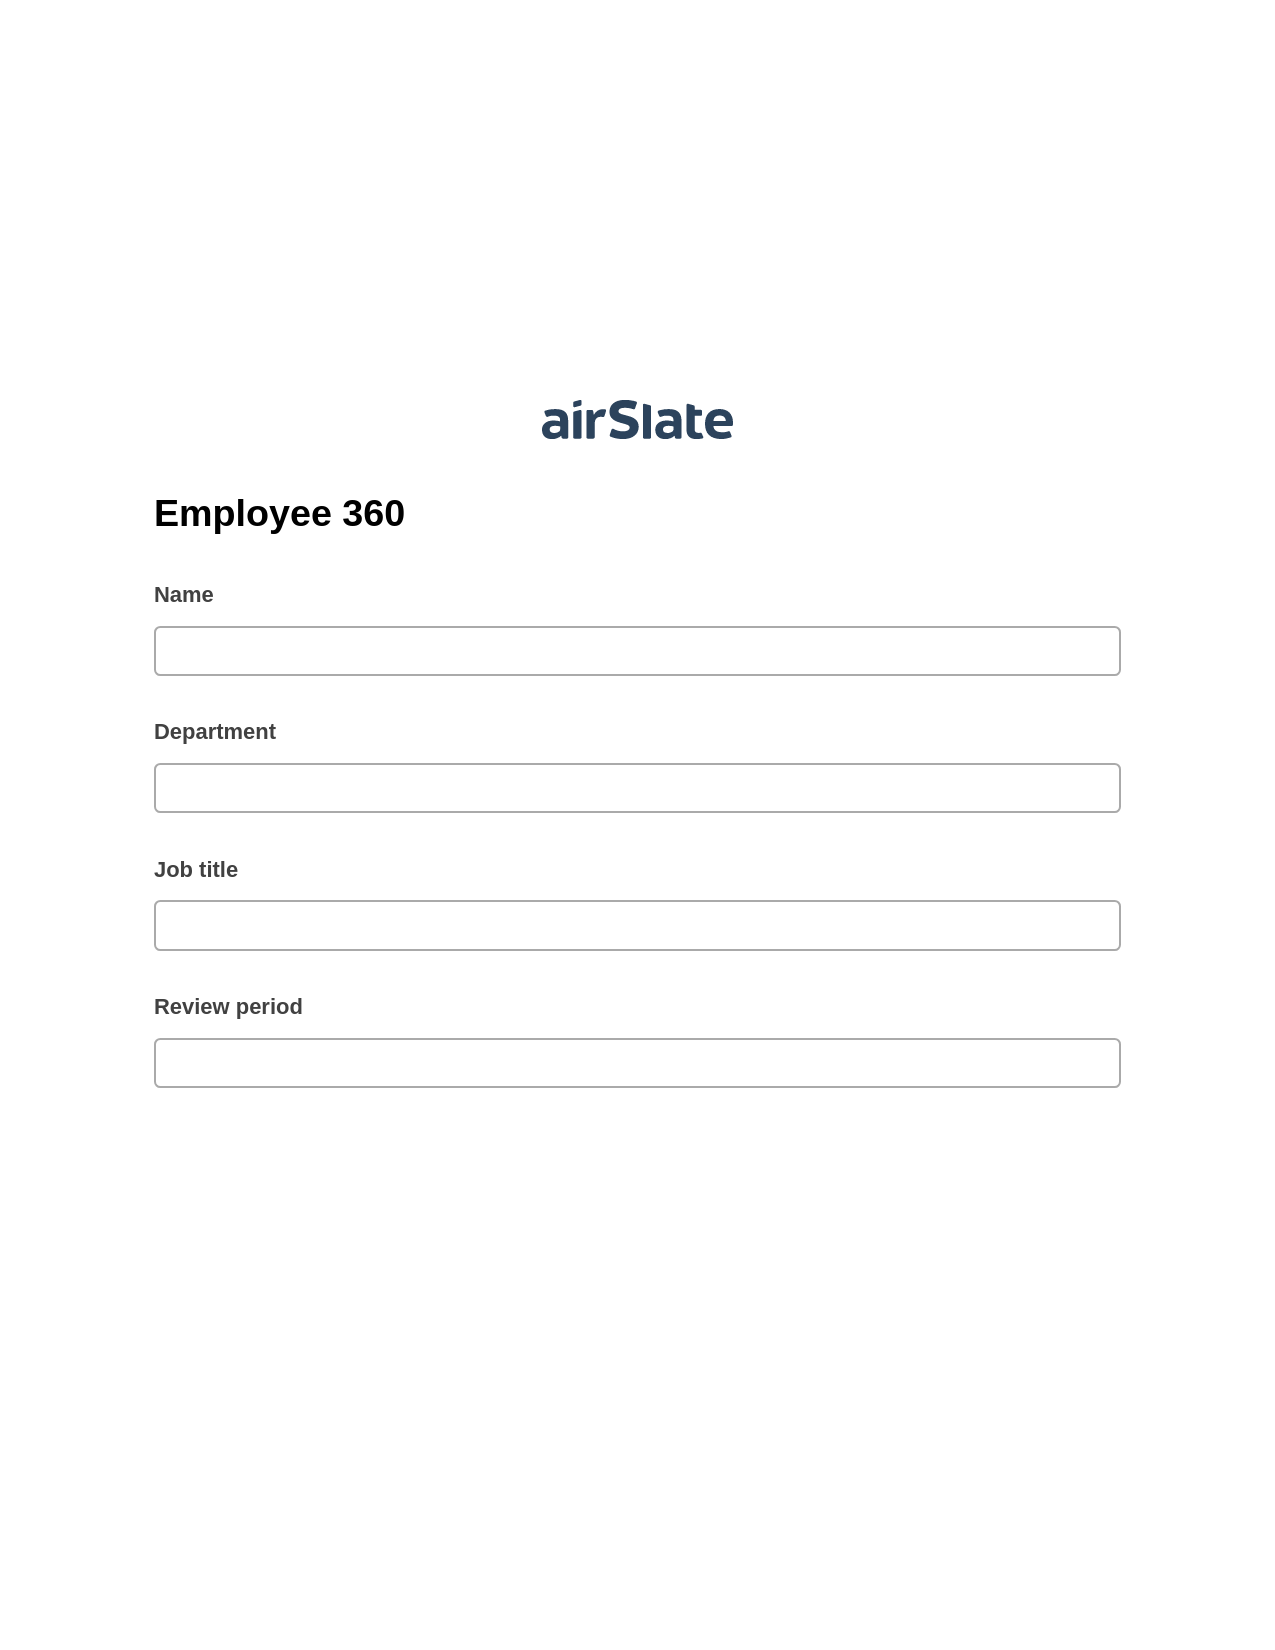 Multirole Employee 360 Pre-fill from CSV File Bot, Google Calendar Bot, Archive to Dropbox Bot